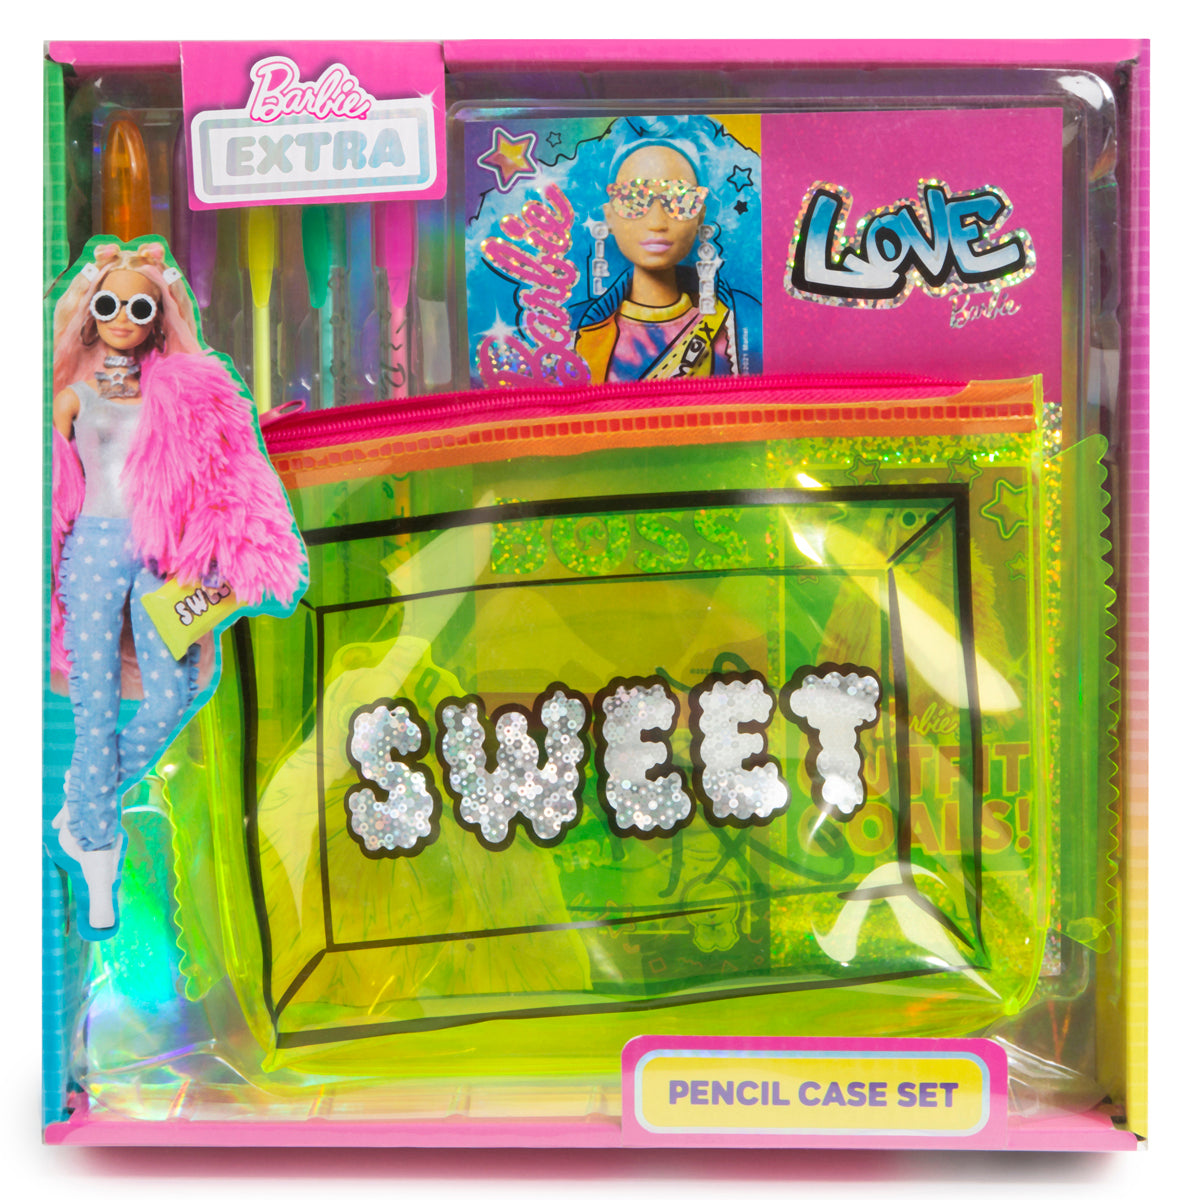 Barbie Extra - Pencil Case Set